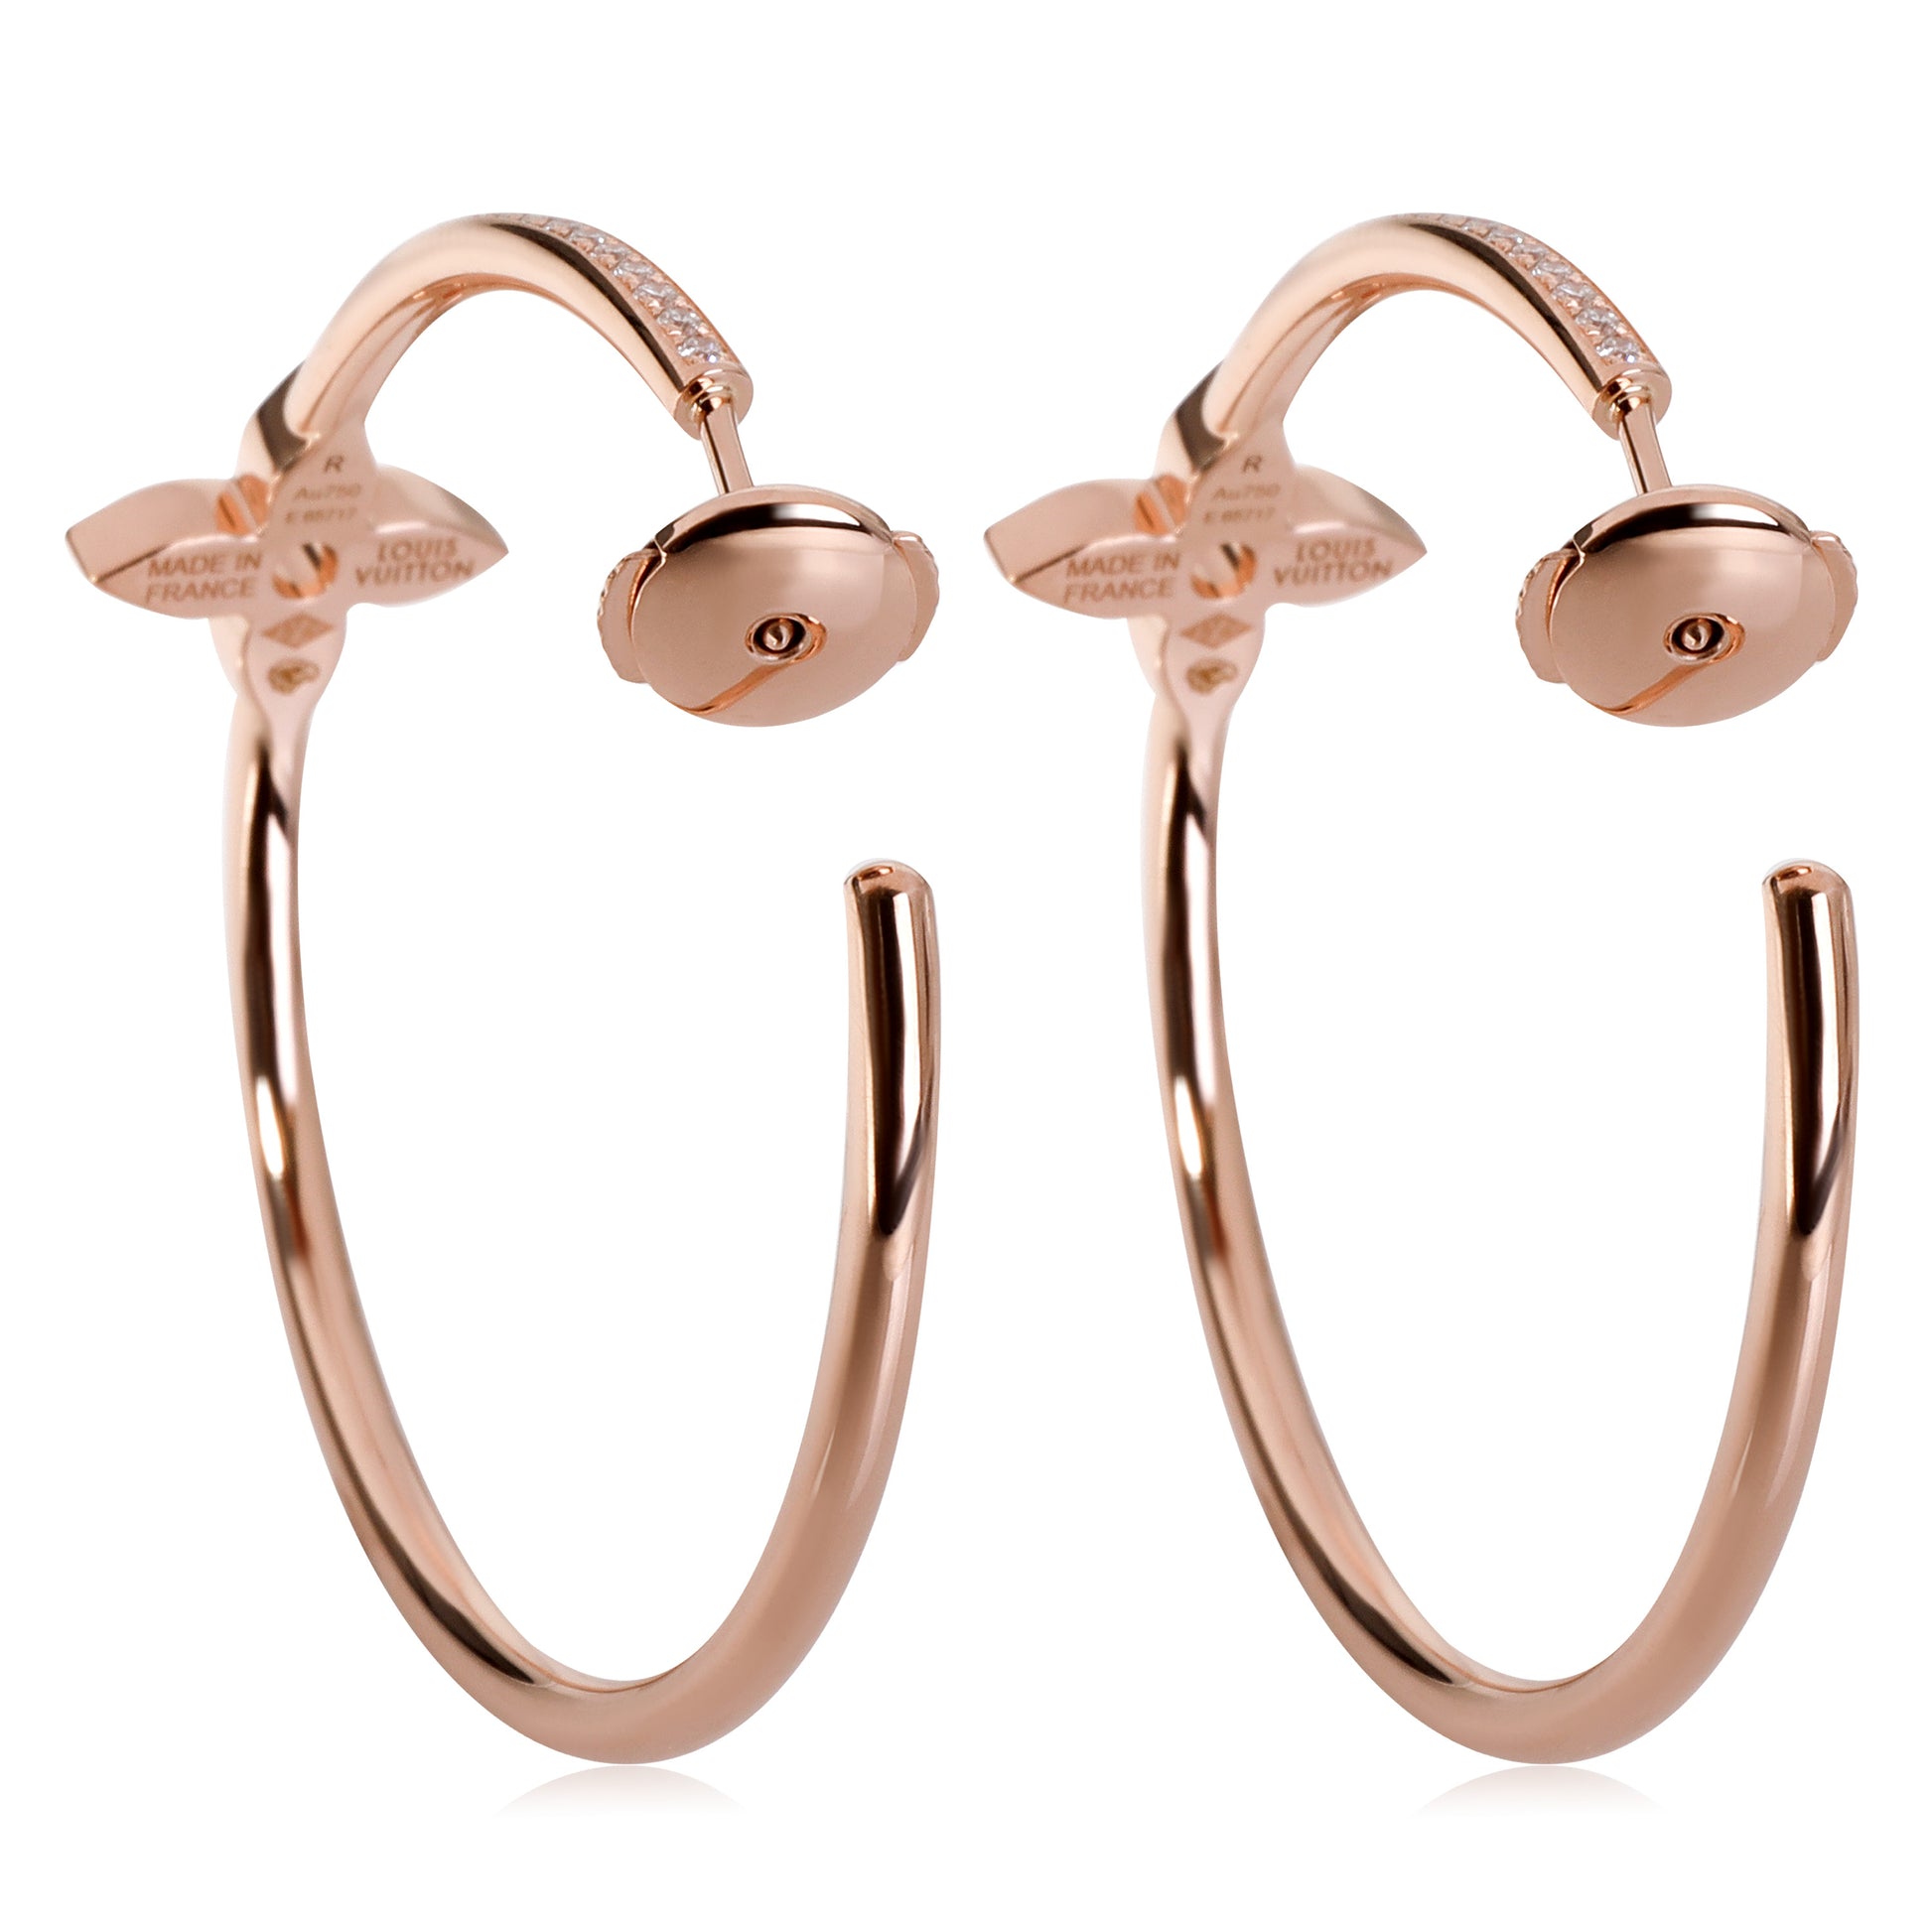 Louis Vuitton Idylle Blossom Hoop Earrings in 18K Rose Gold 0.61 CTW